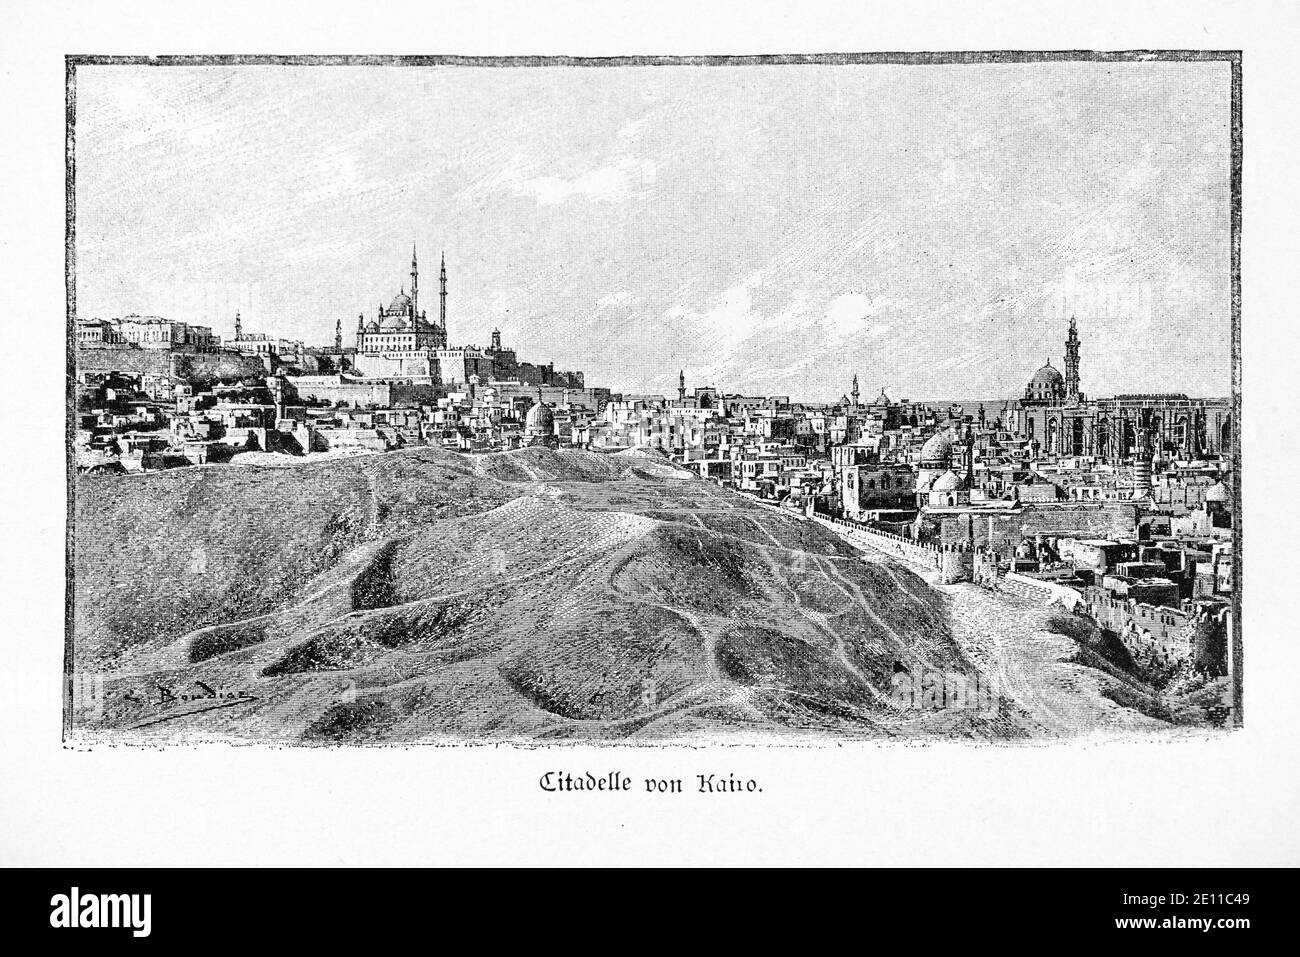 "Citadelle von Kairo", the Citadel of Kairo on a hill wiithin the city, Kairo, Egypt, illustration from "Die Hauptstädte der Welt." Breslau about 1987 Stock Photo